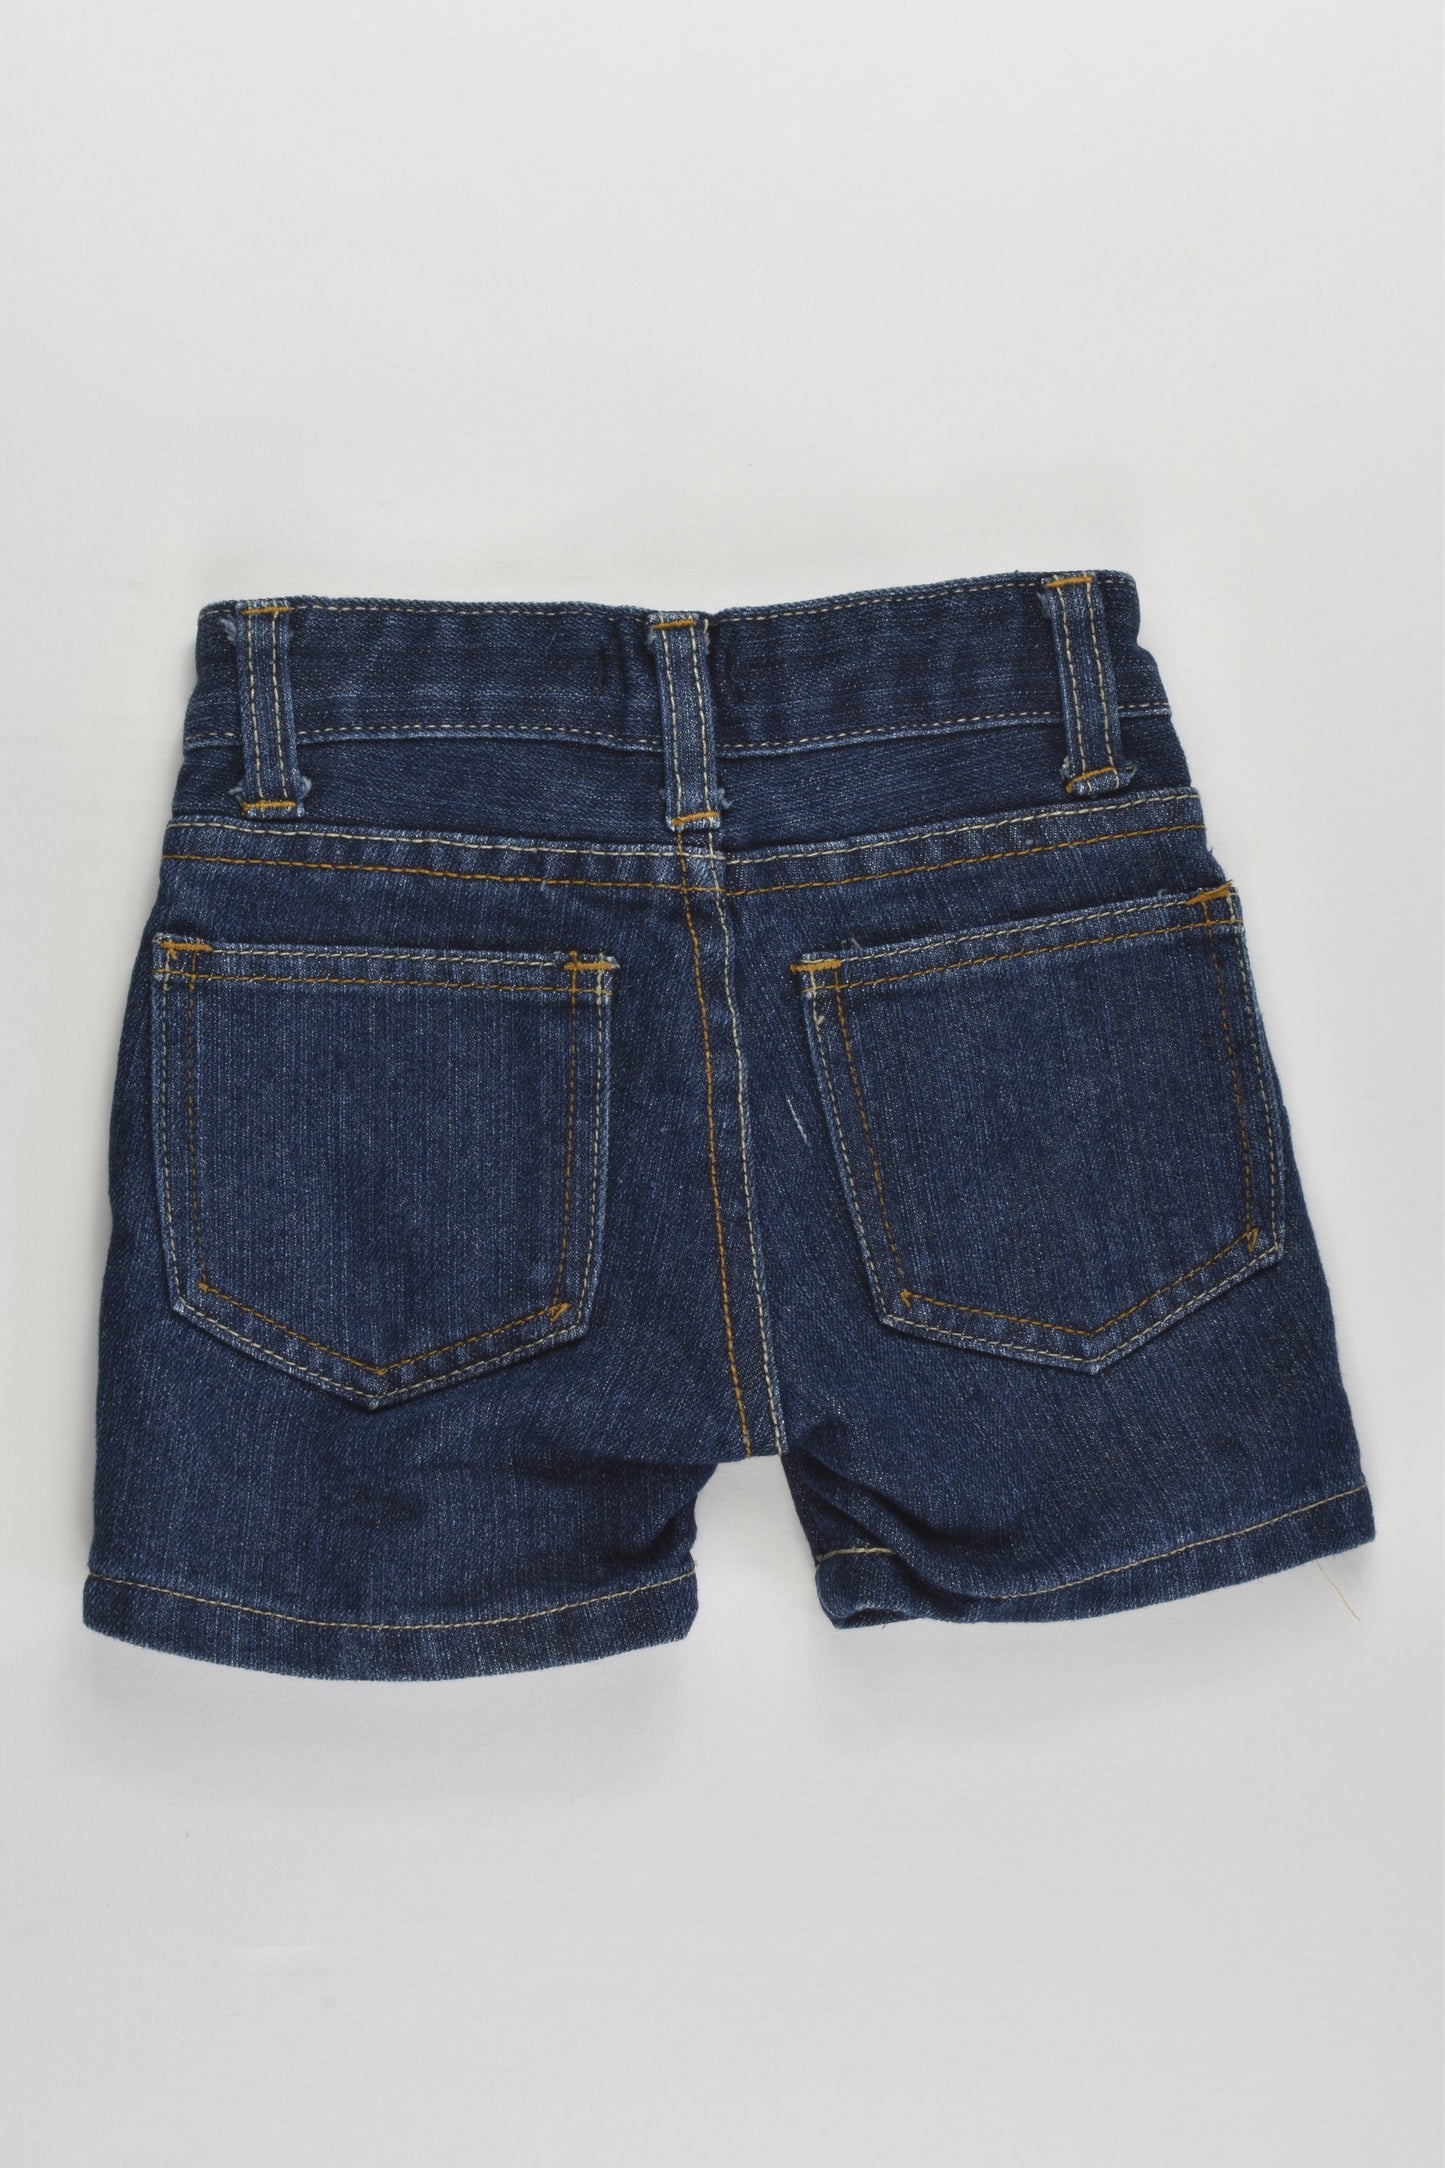 Pumpkin Patch Size 0 (6-12 months) Denim Shorts